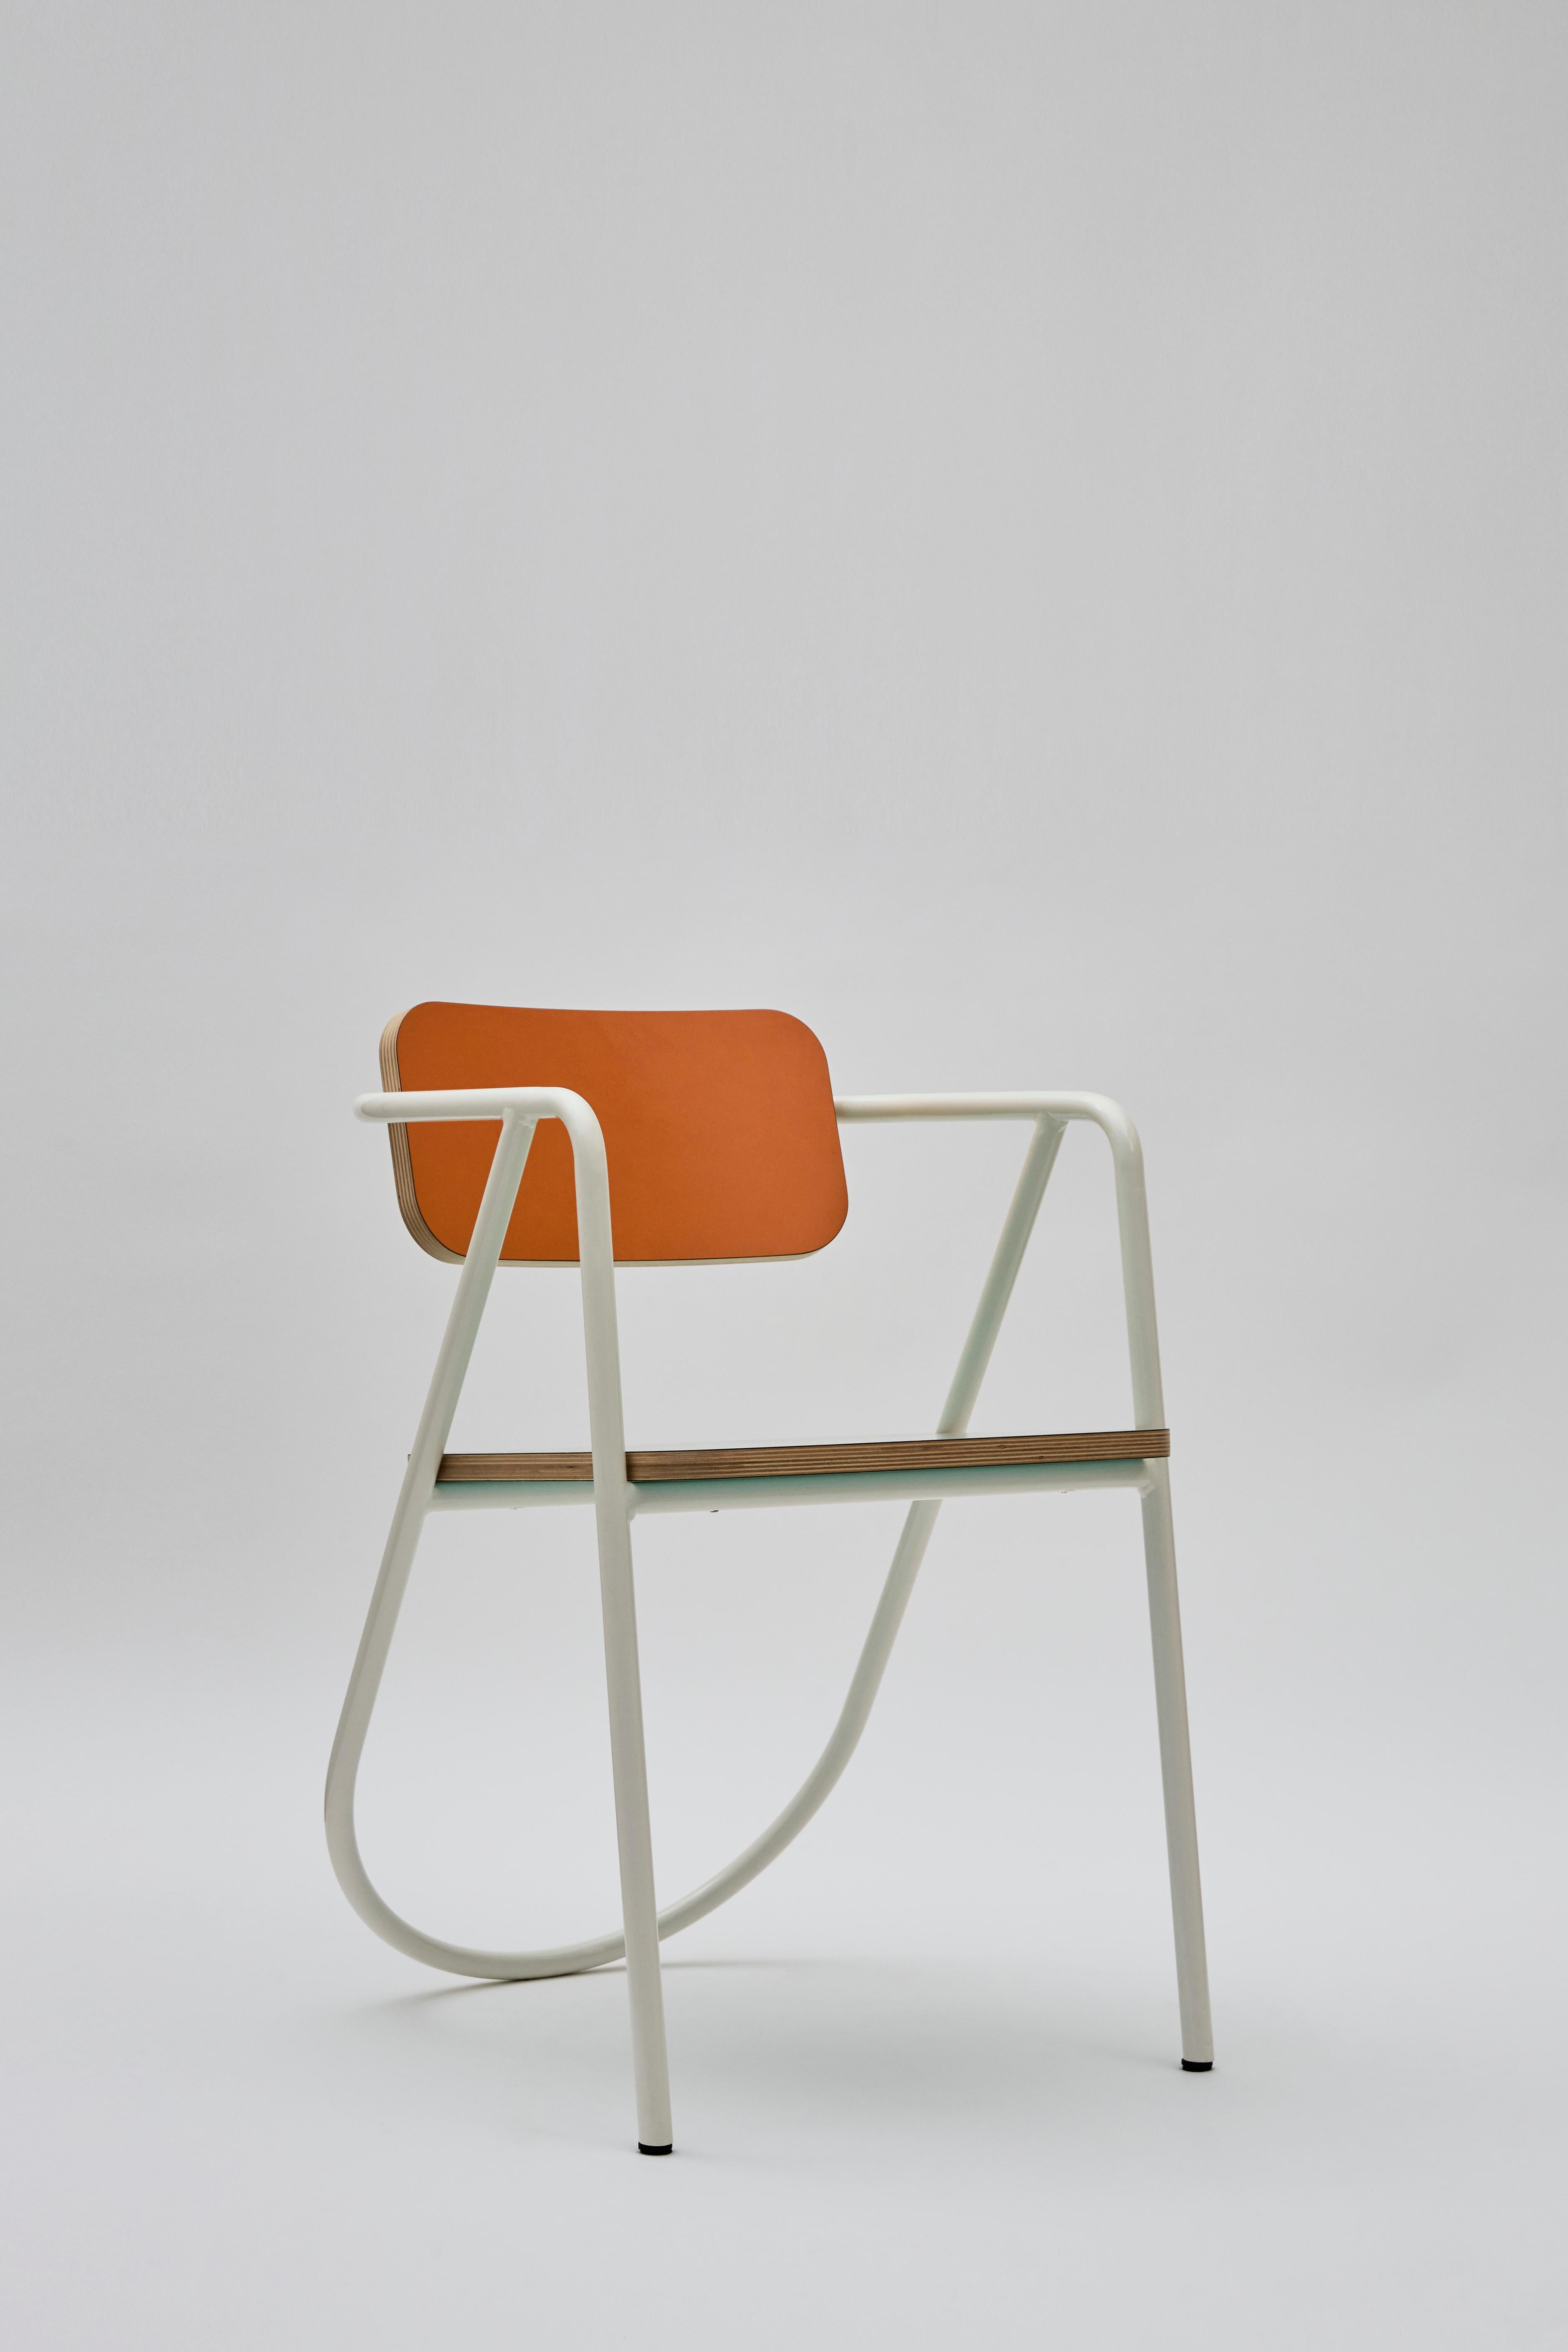 Laminated La Misciù Chair, White, Teal & Orange For Sale